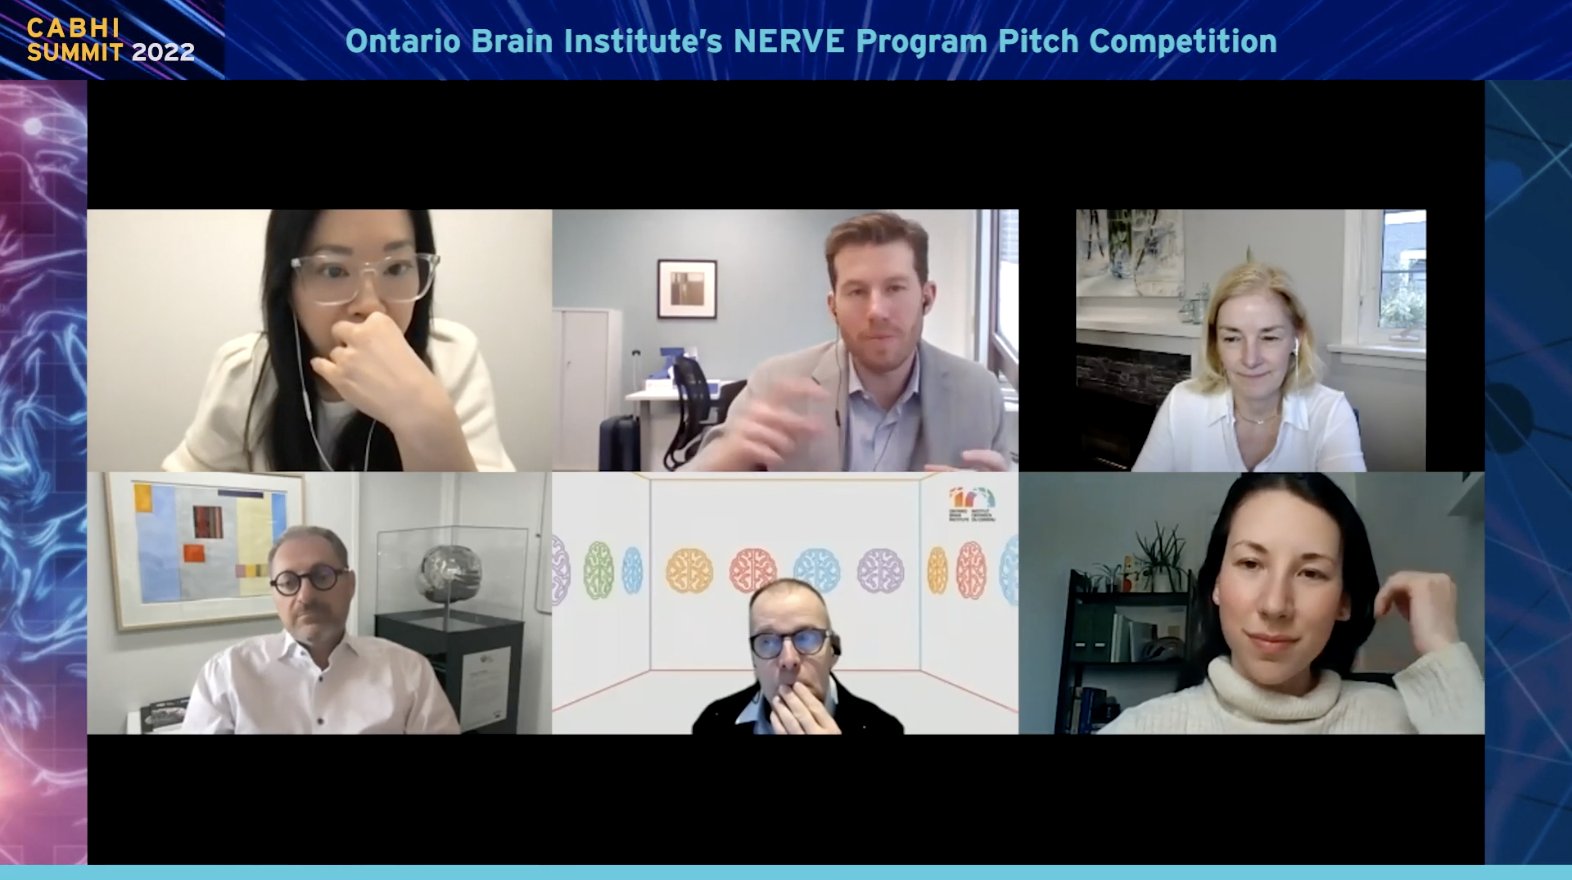 Ontario Brain Institute NERVE Program Pitch Competition judging panel.